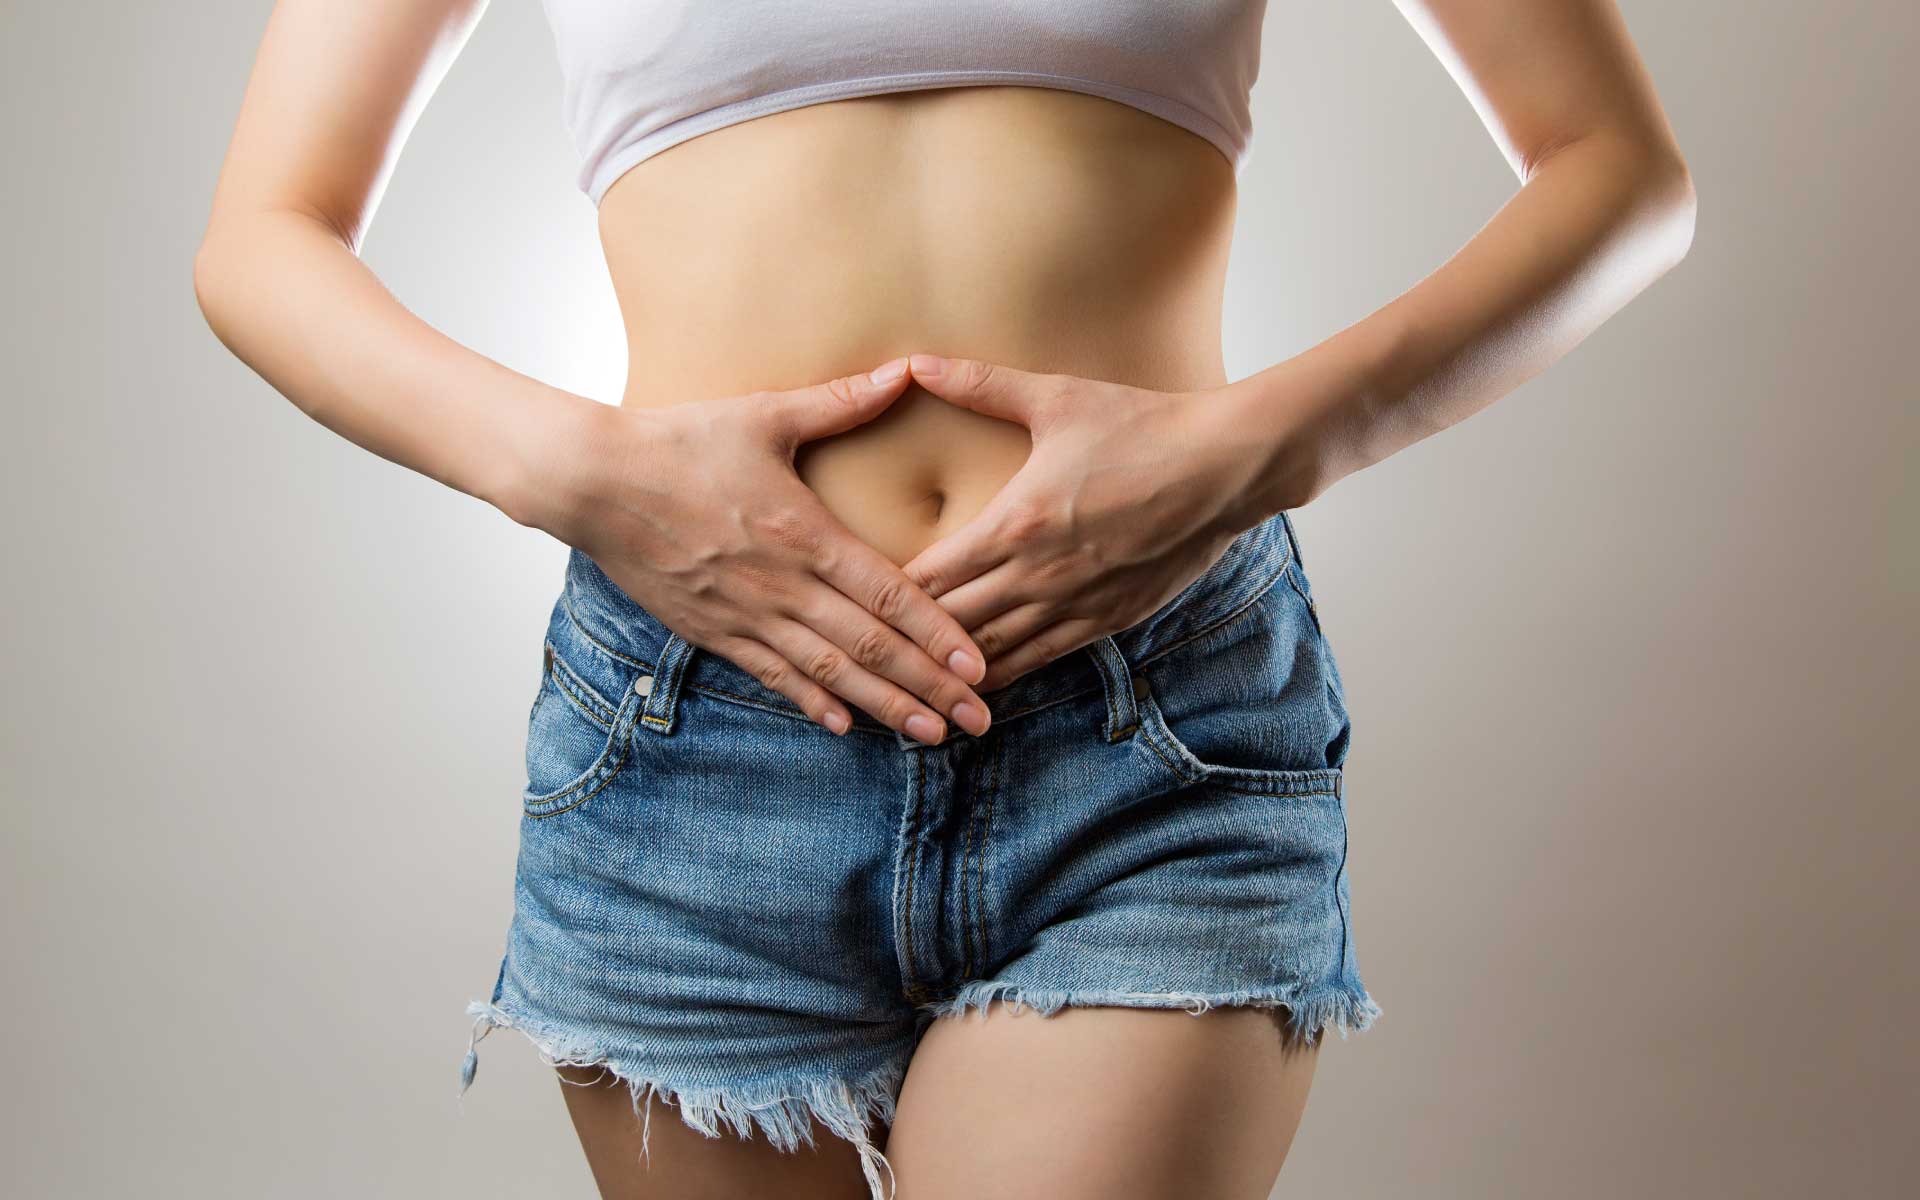 THE OESTROBOLOME – the gut-hormone connection